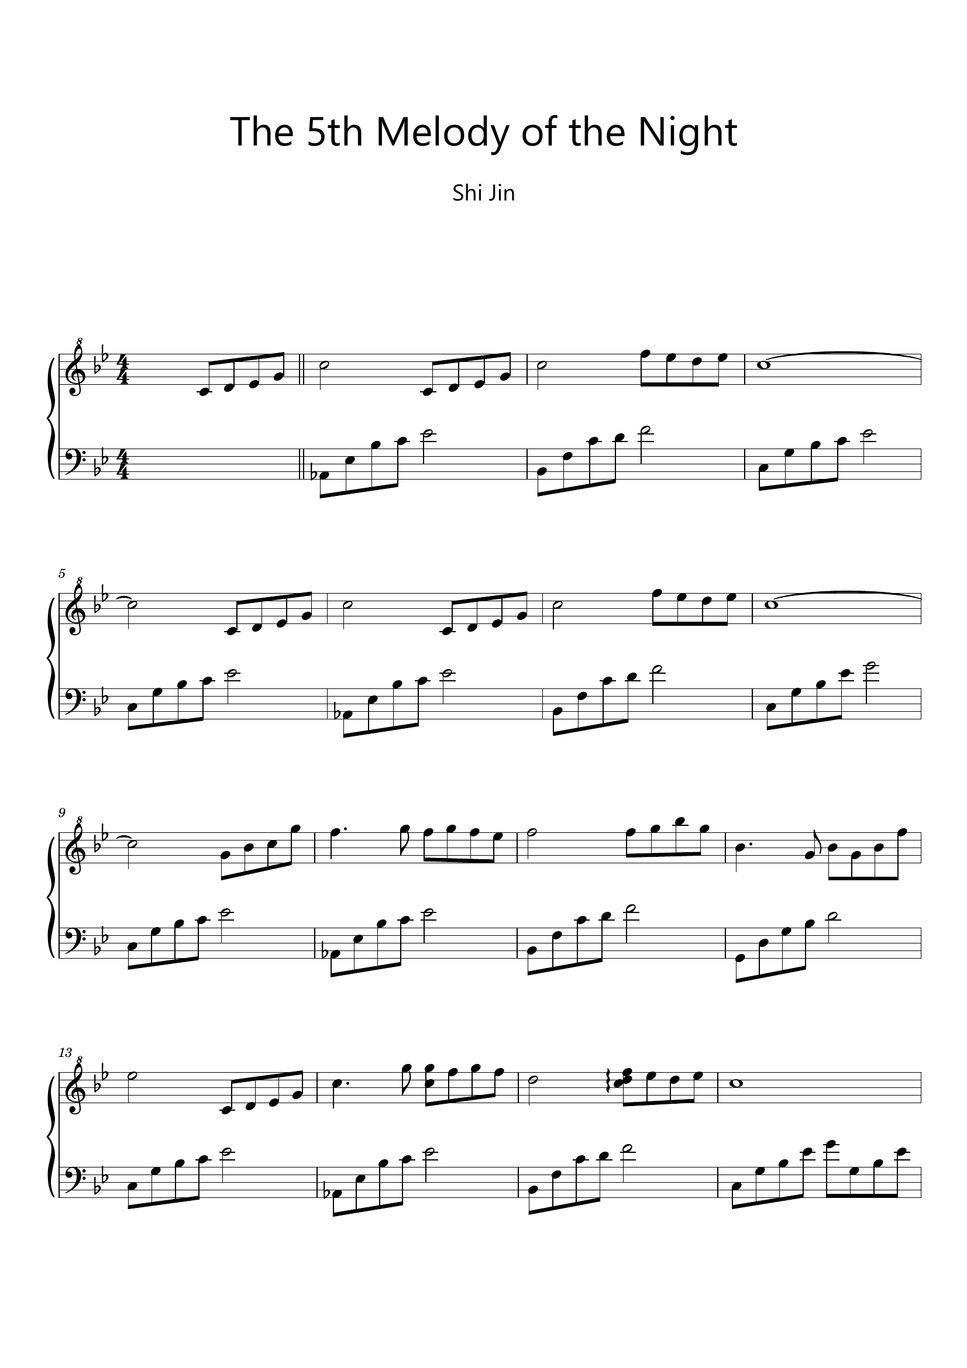 Shi Jin - The 5th Melody of the Night (Sheet Music, MIDI,) by sayu